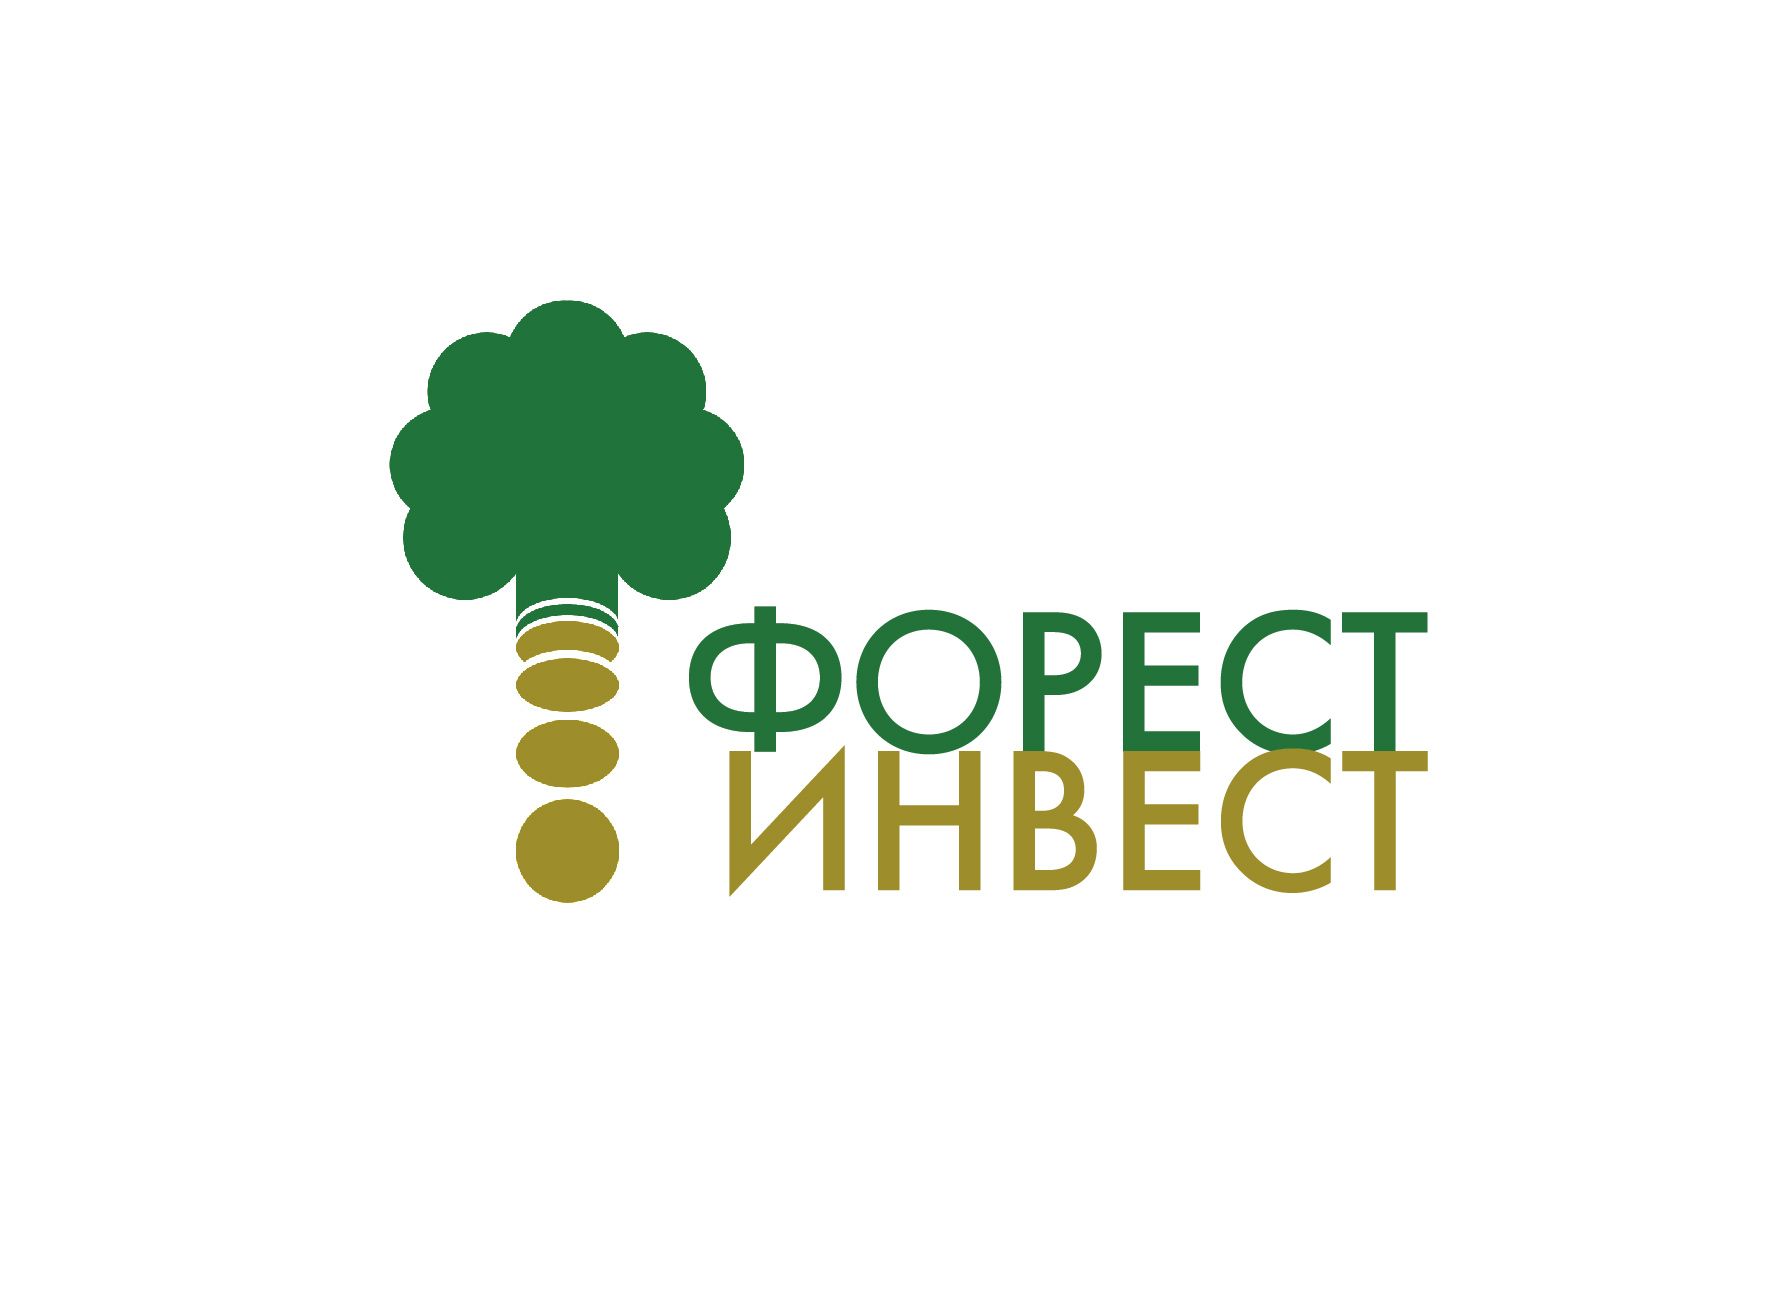 Логотип для лесоперерабатывающей компании - дизайнер BRUINISHE